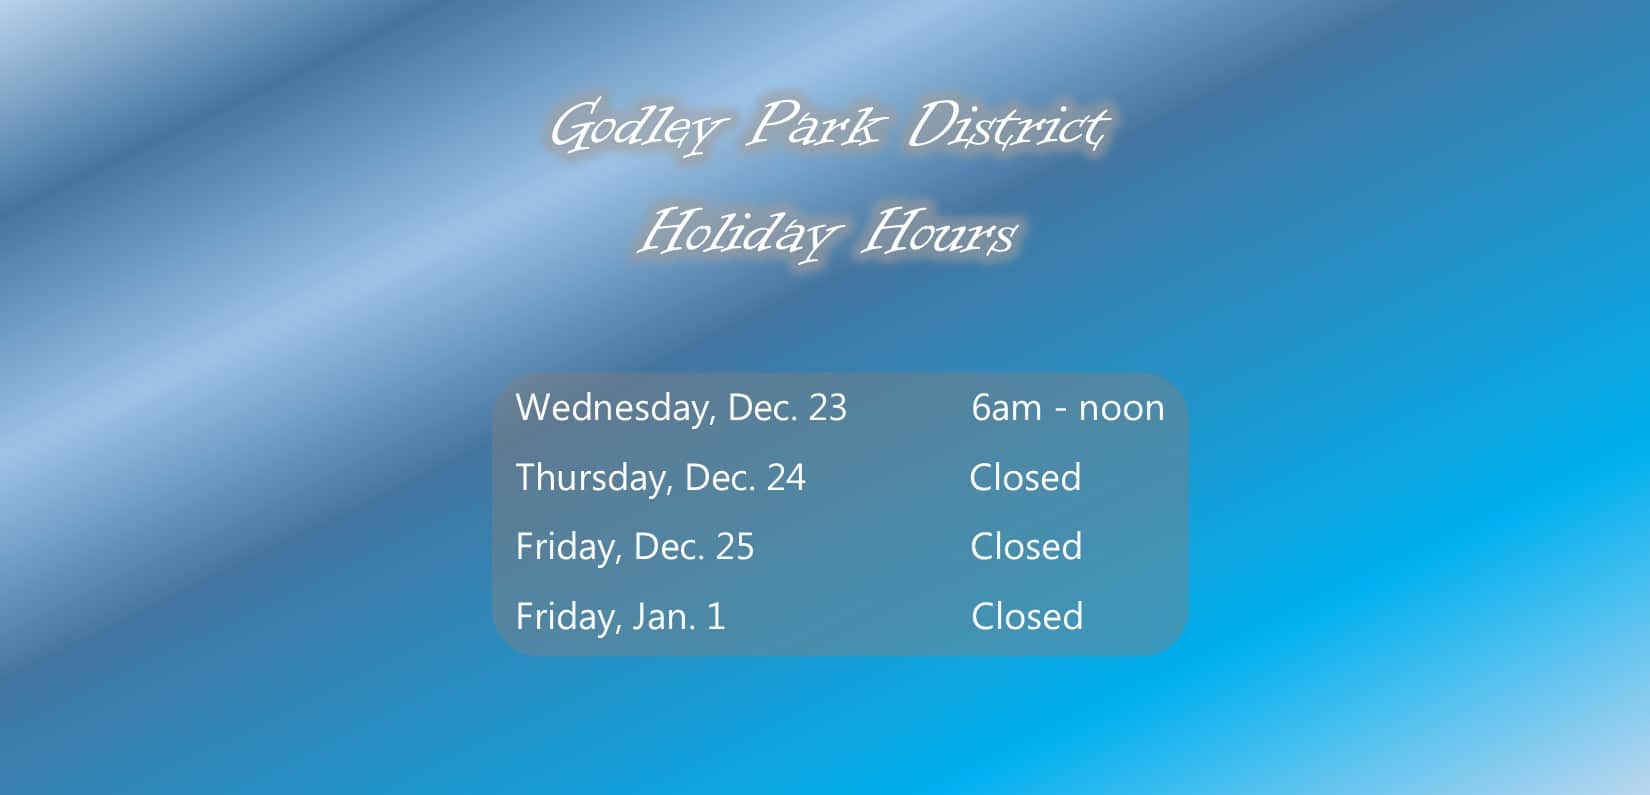 2020 Winter Hours Website Godley Park District